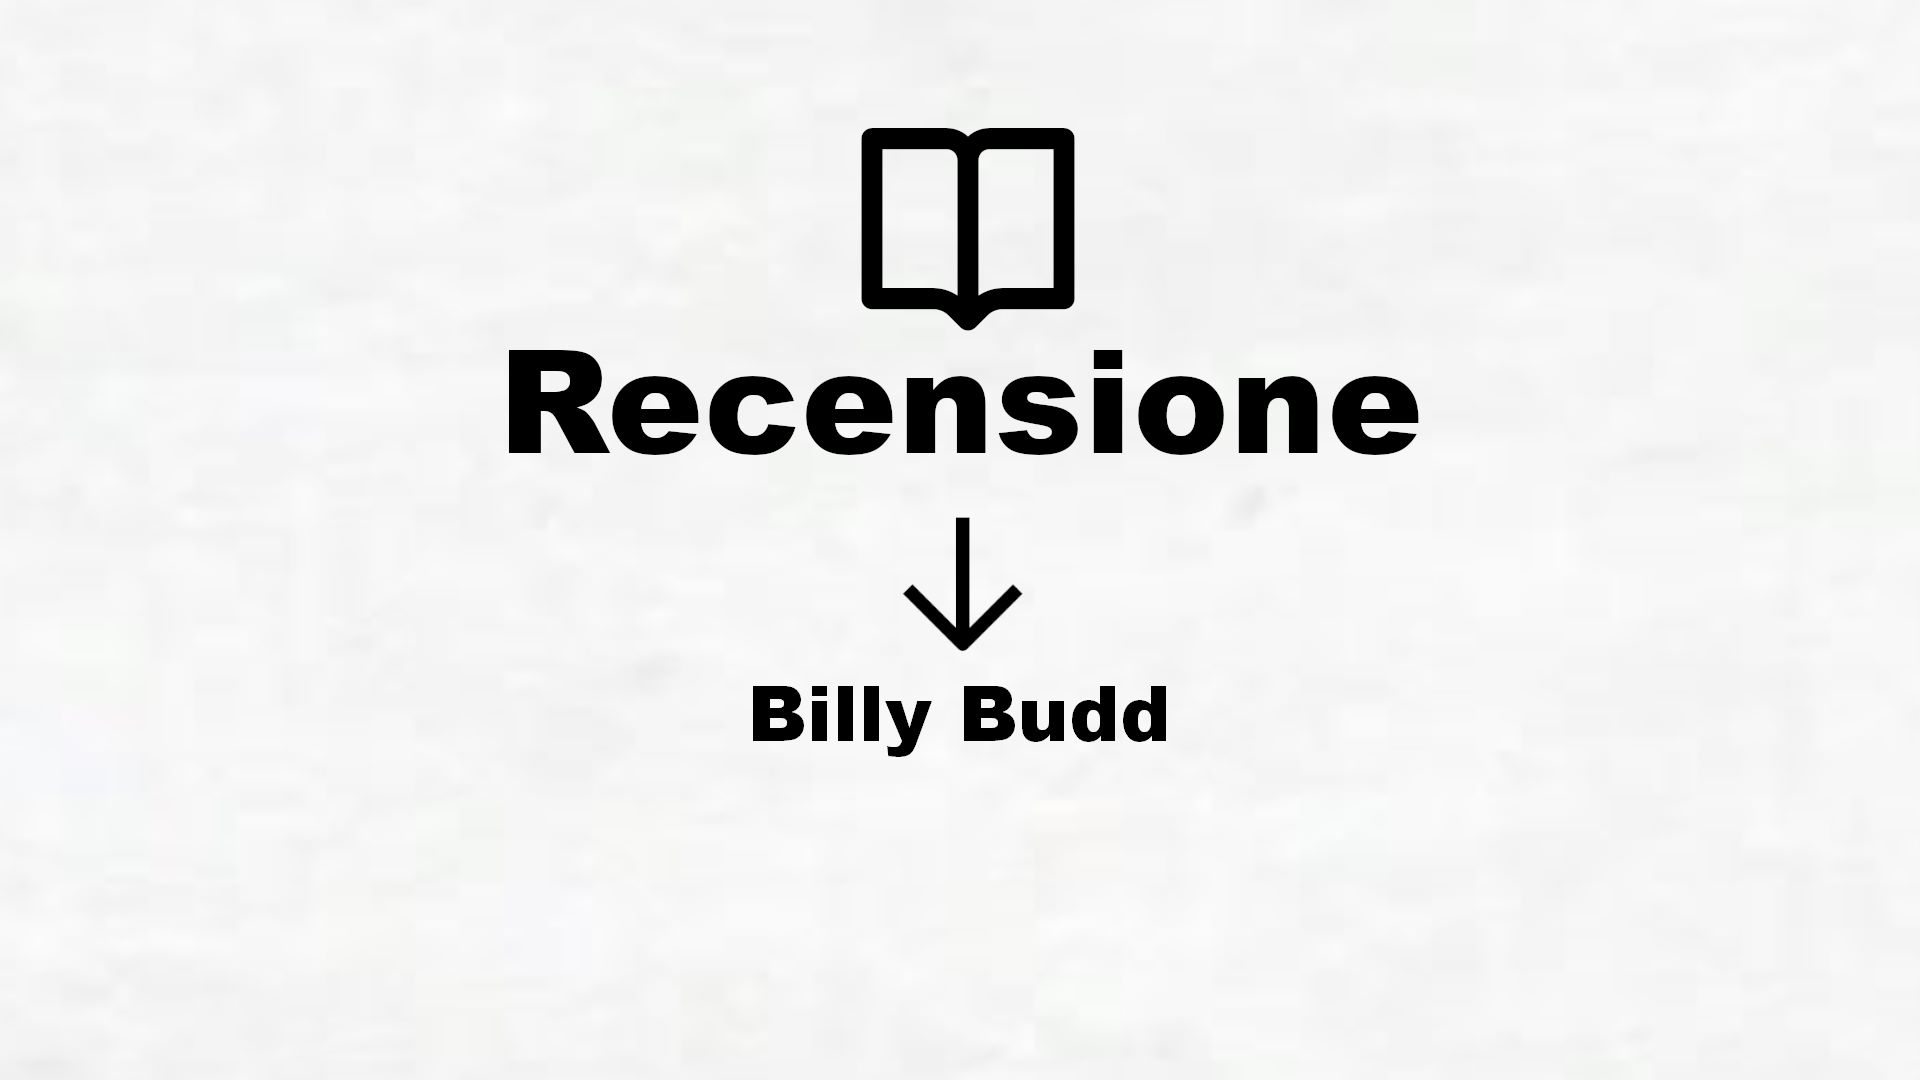 Billy Budd – Recensione Libro